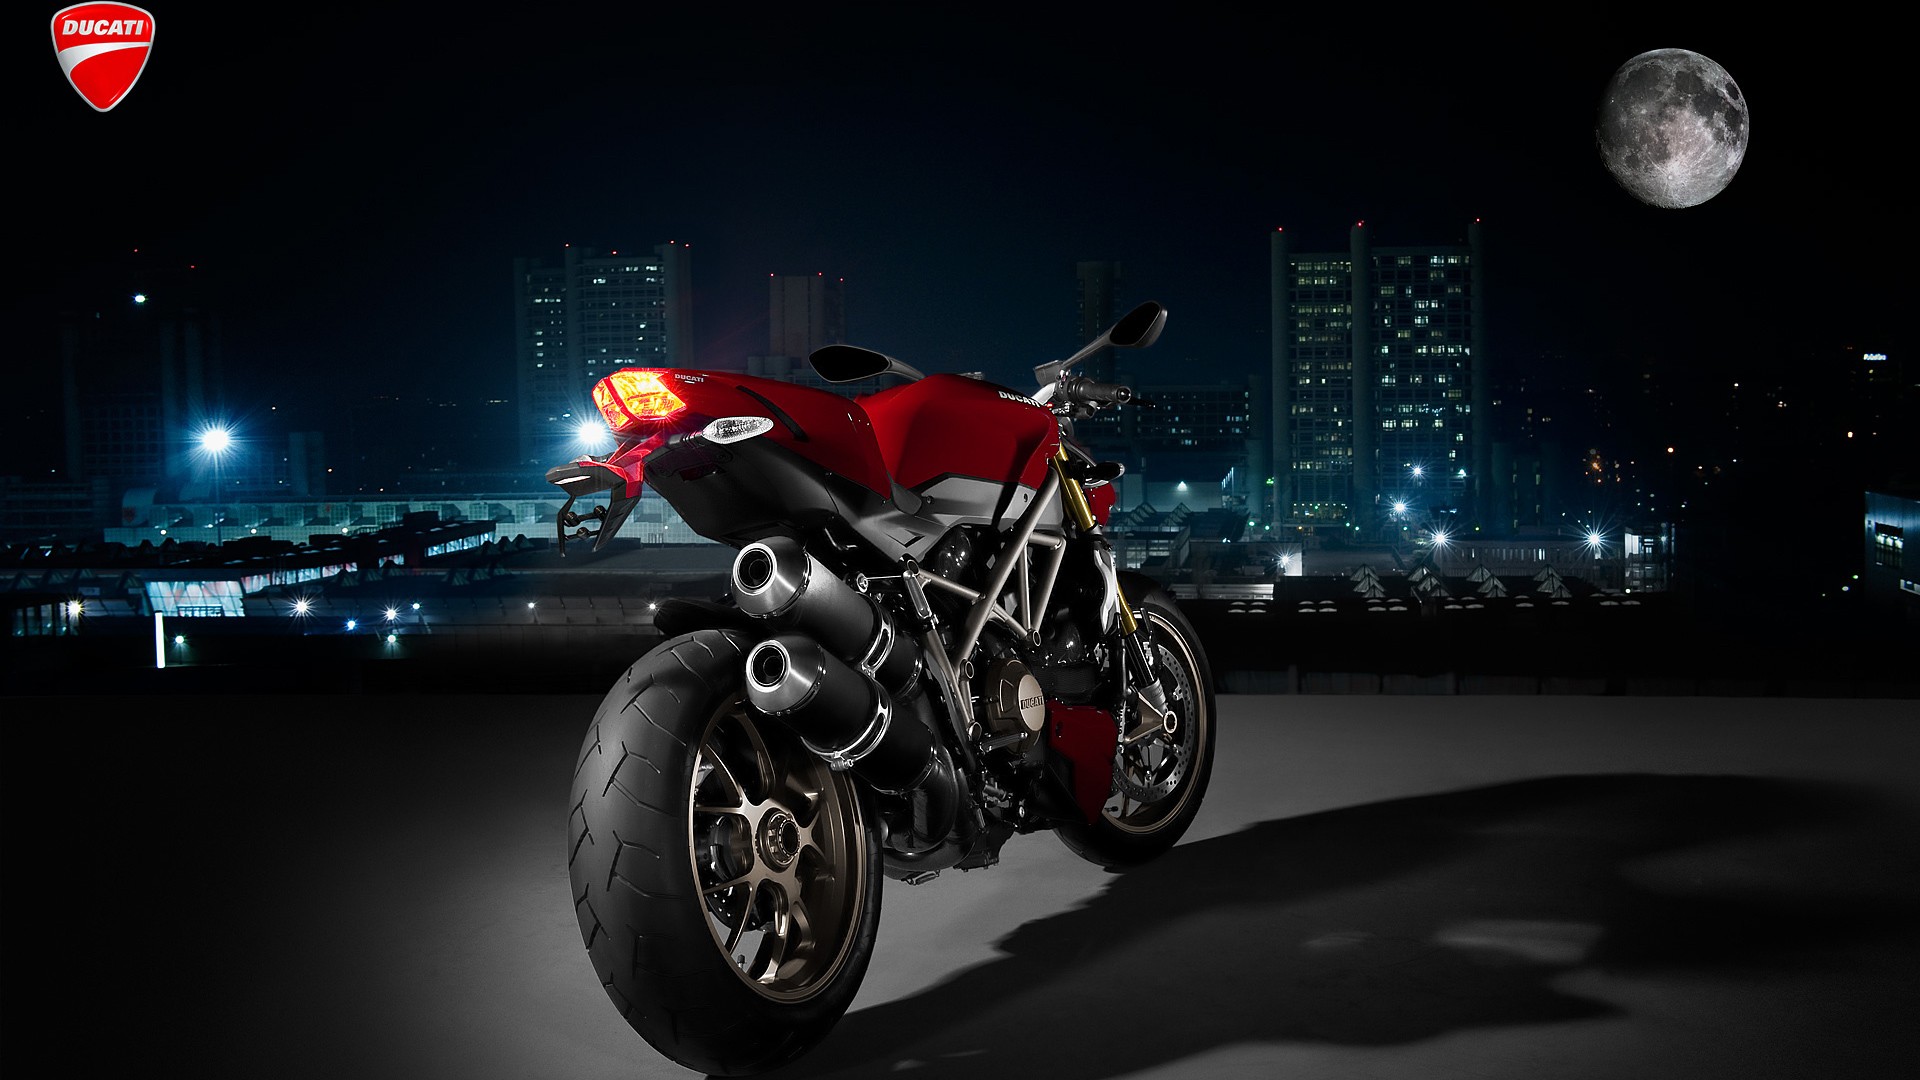 Quality Ducati Bike Screensavers wallpapers HD is free HD wallpaper